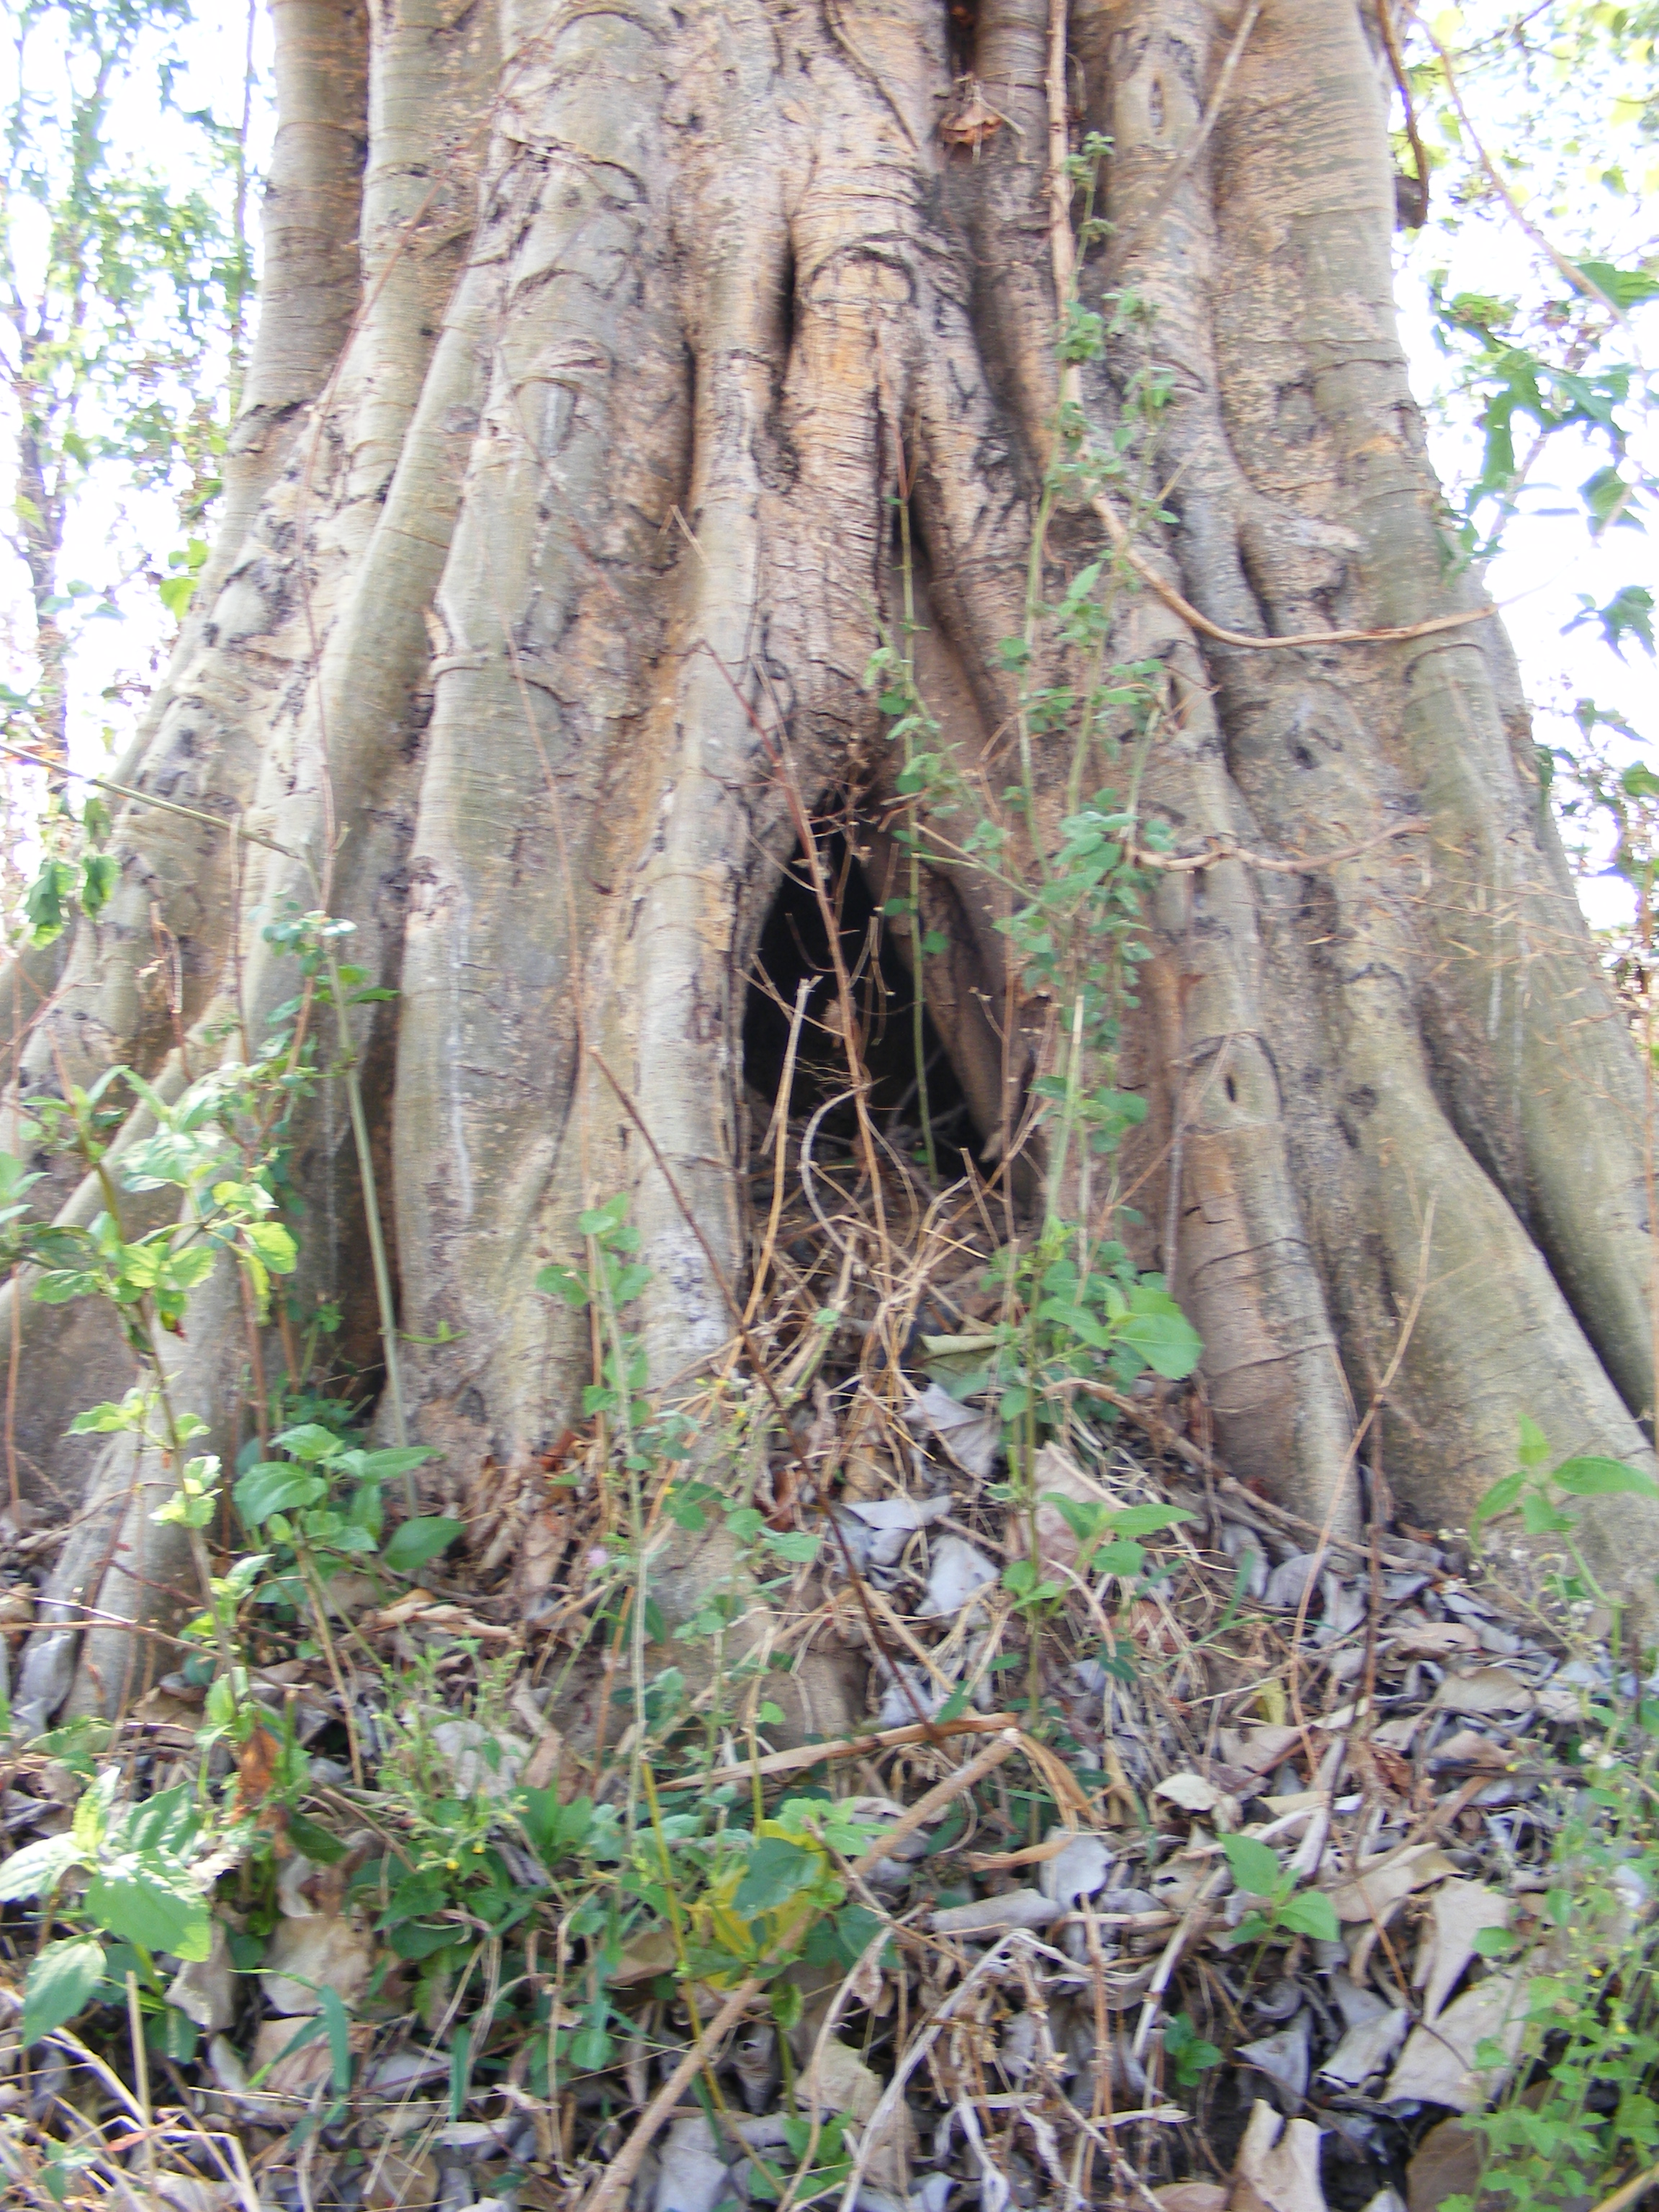 File:Hollow tree - Thailand.JPG - Wikimedia Commons